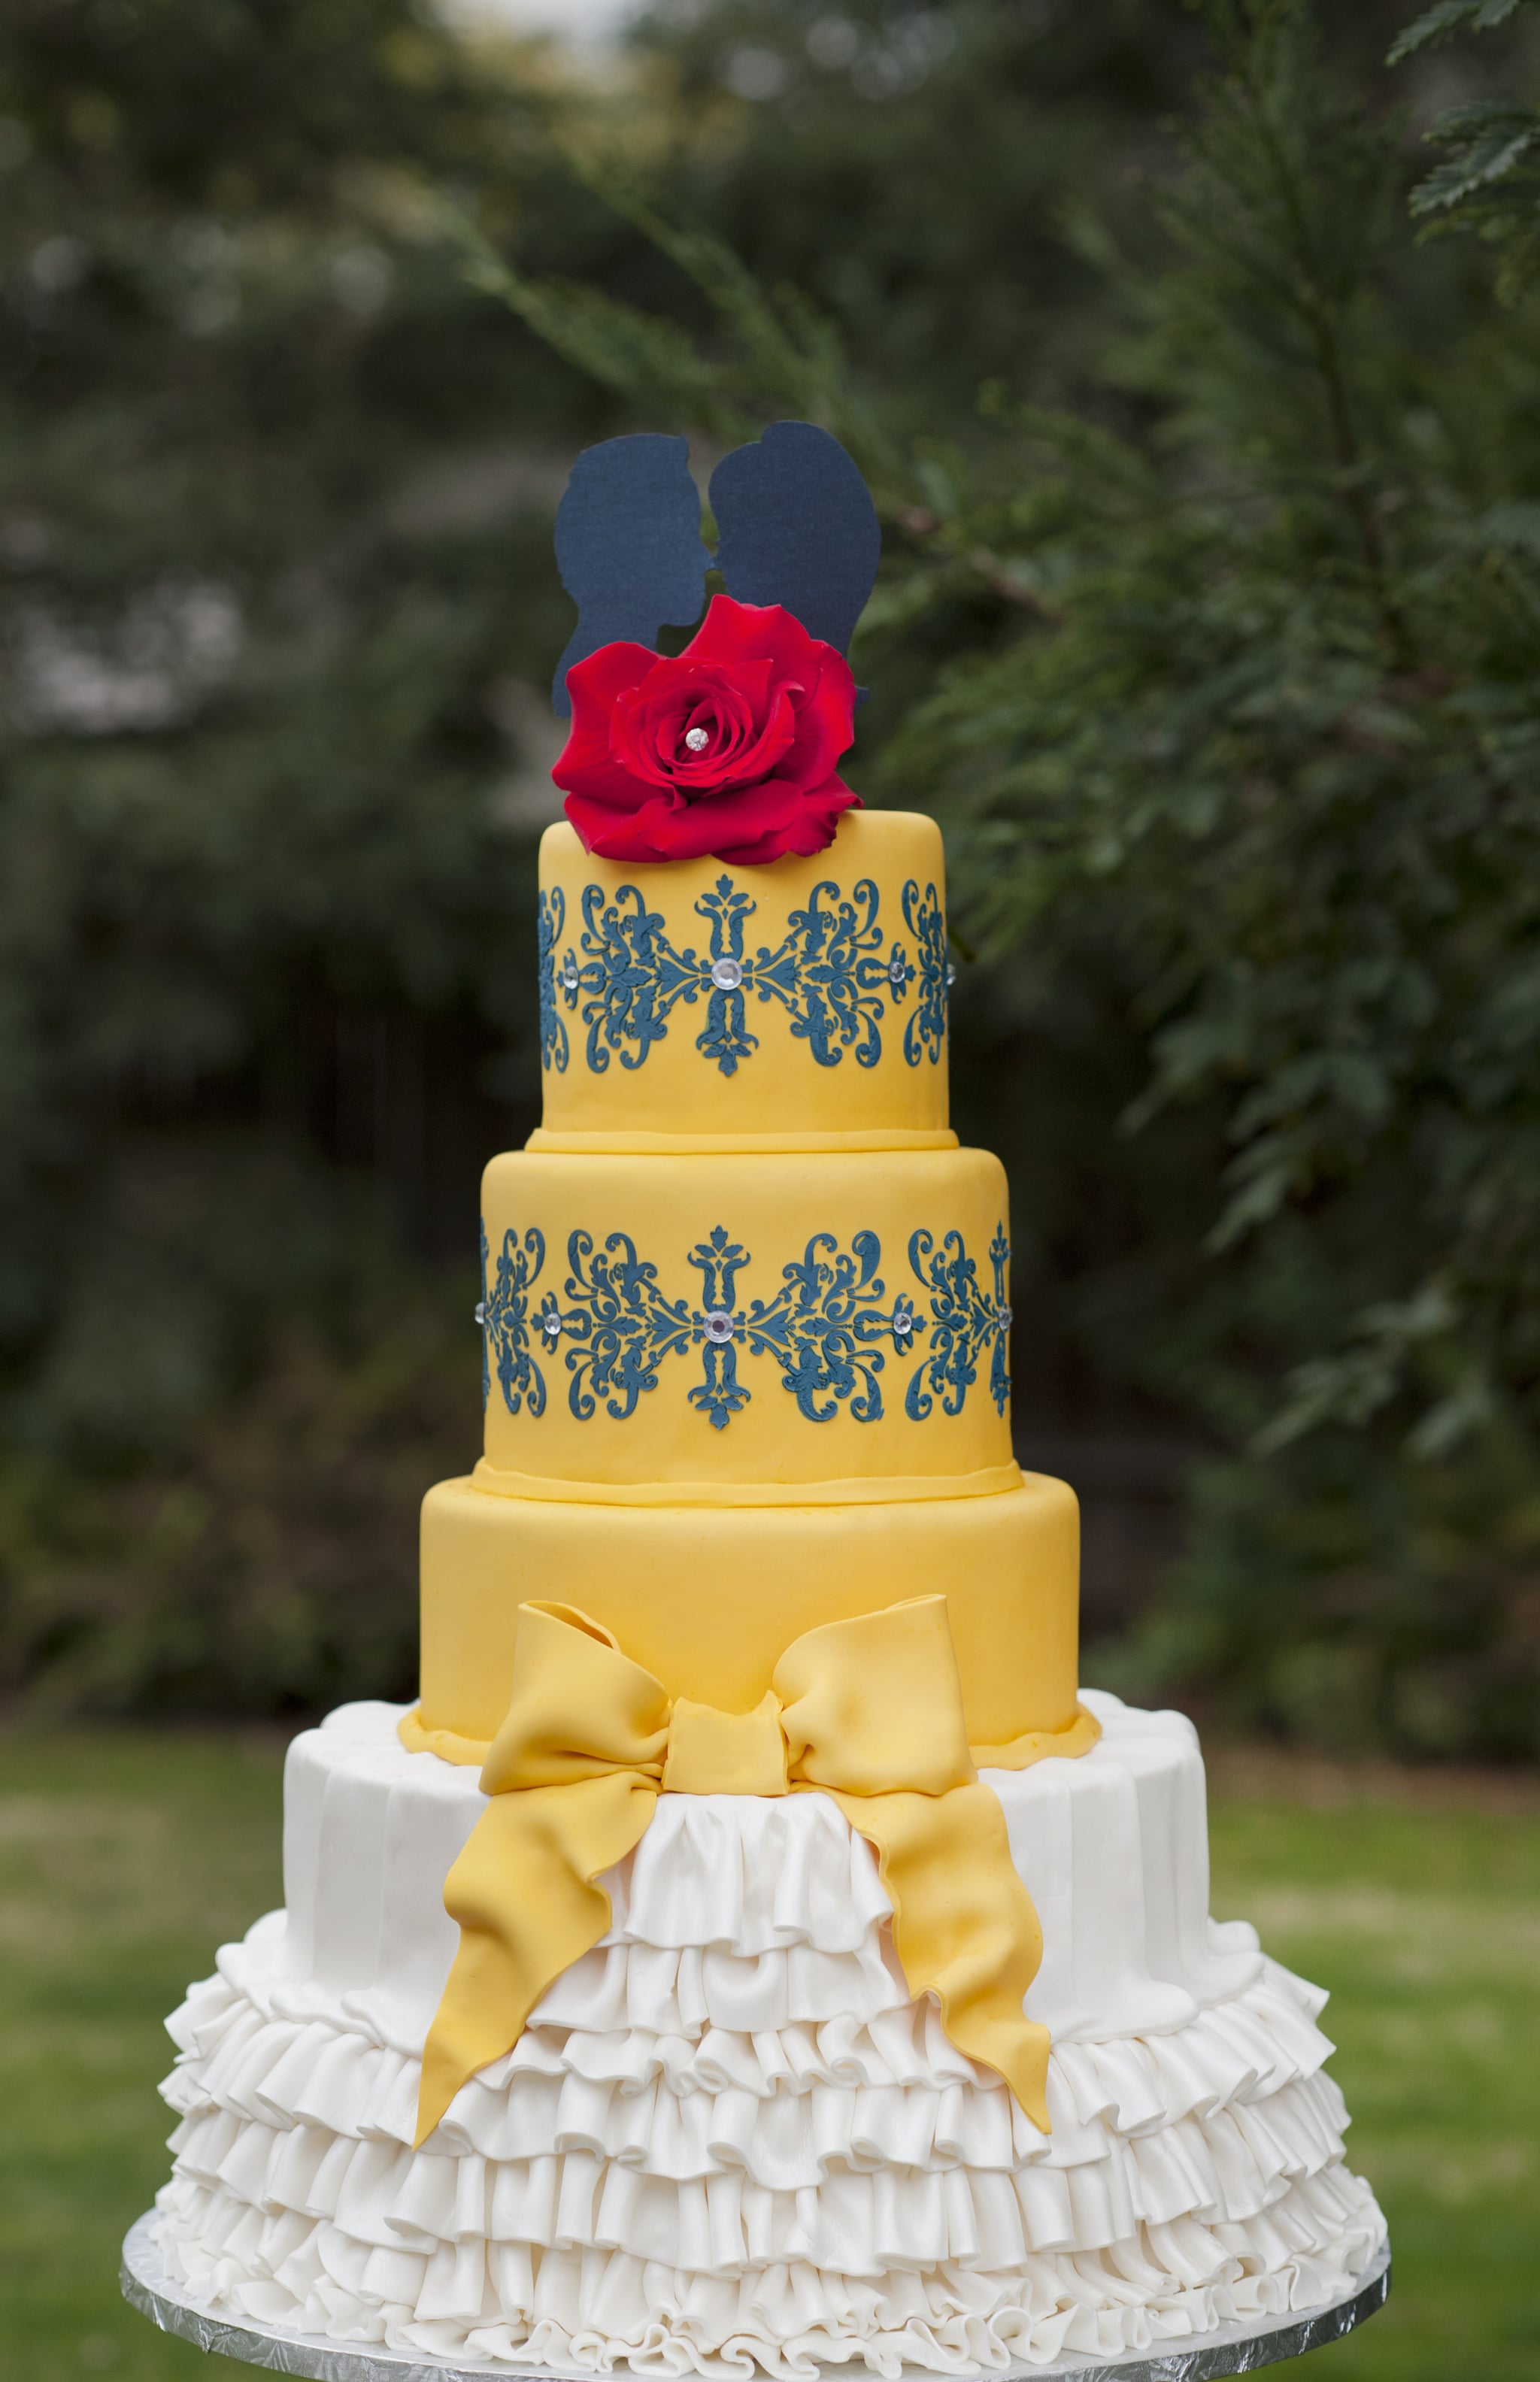 Beauty And The Beast Dreamy Disney Wedding Cake Ideas To Fantasize Over Popsugar Food Photo 21